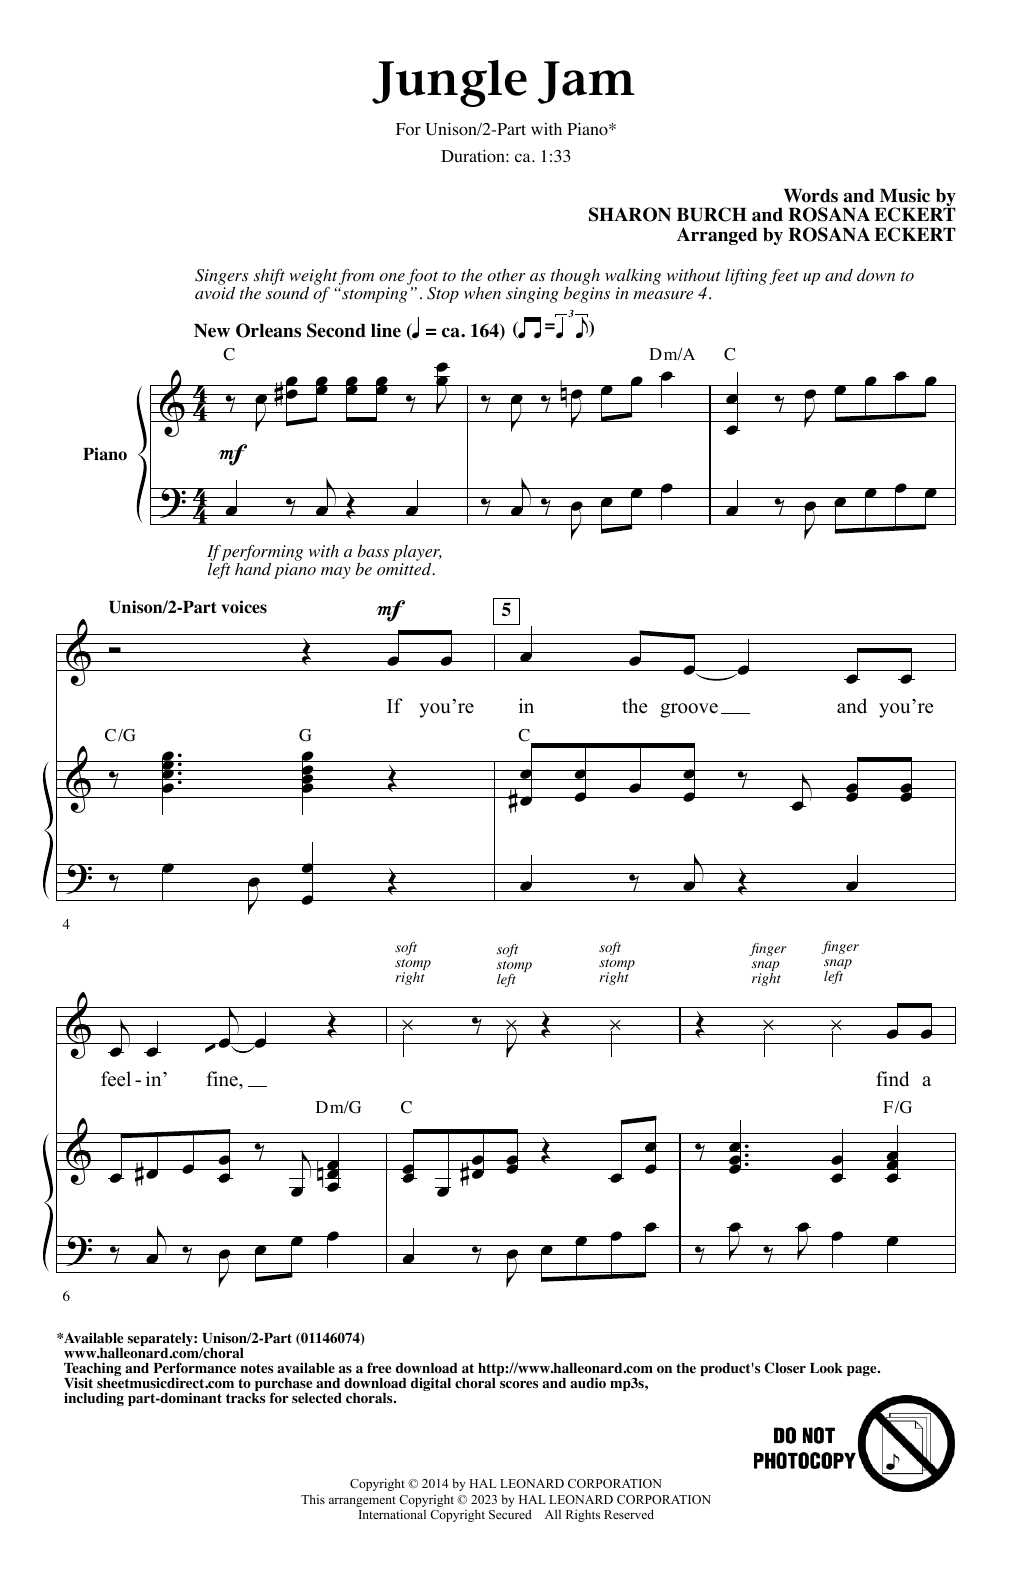 Sharon Burch and Rosana Eckert Jungle Jam Sheet Music Notes & Chords for Choir - Download or Print PDF